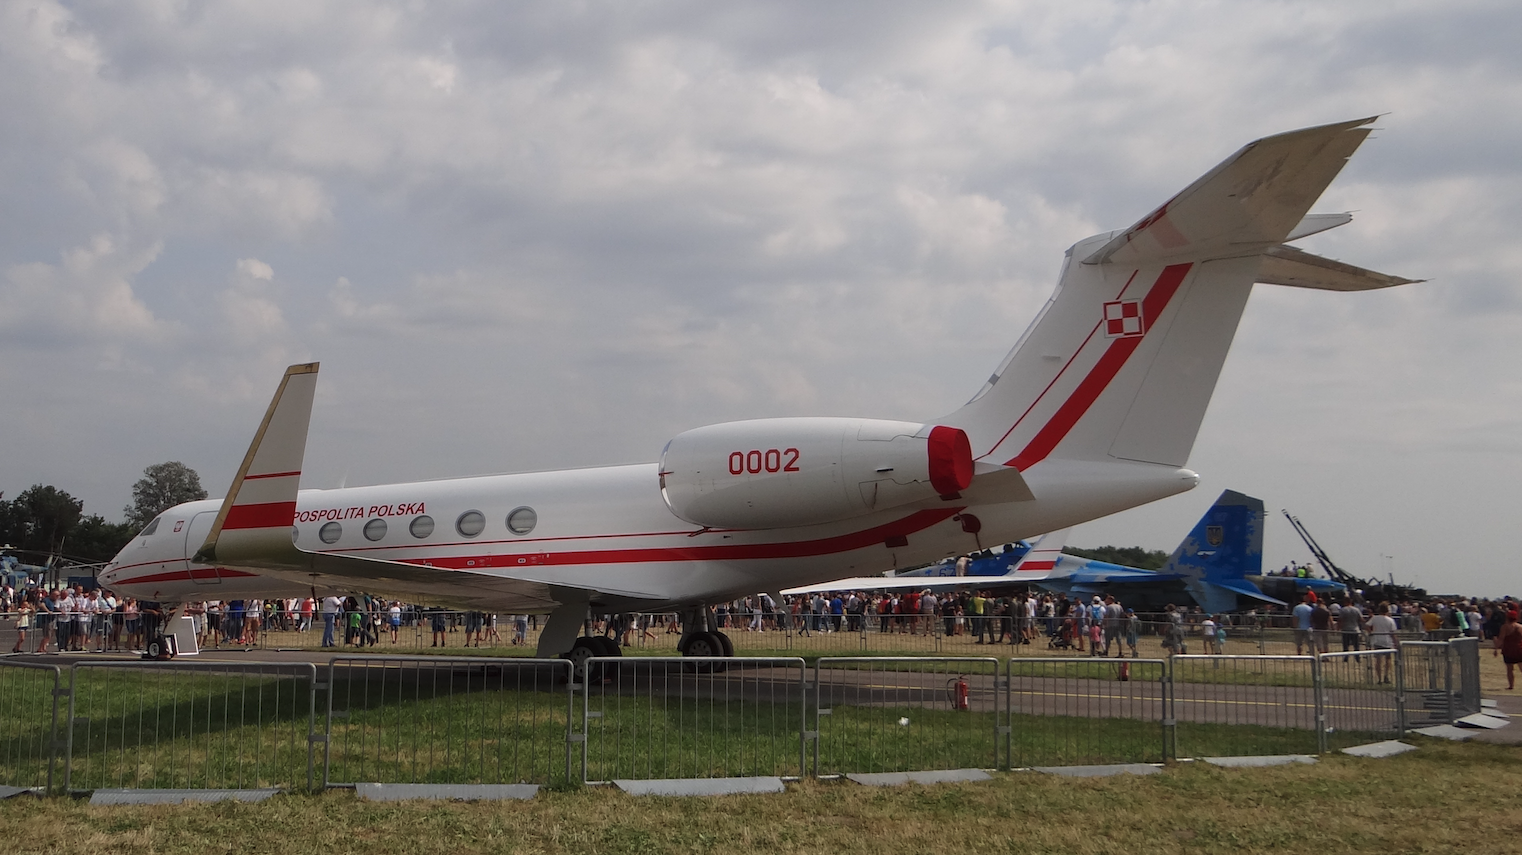 G550 Gulfstream Aerospace Nb 0002 "General Kazimierz Pułaski" 2017 year. Photo Karol Placha Hetman